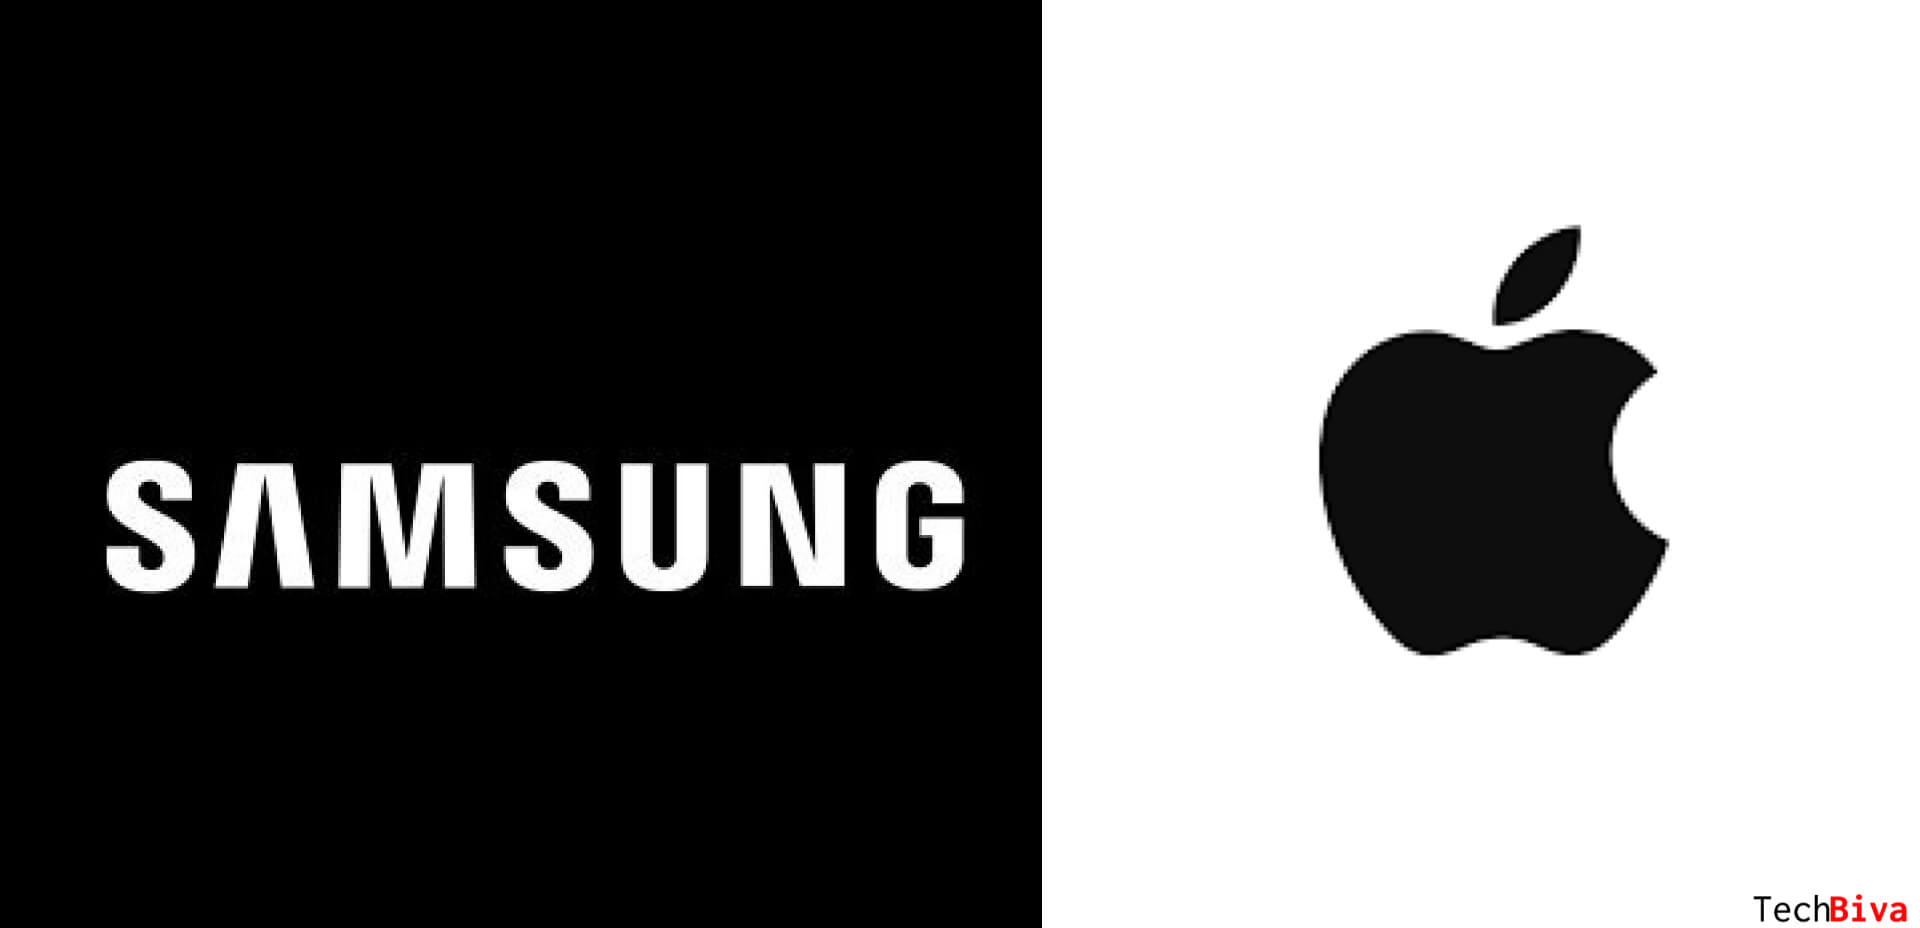 Why Isnt Samsung Worth Trillion Dollars